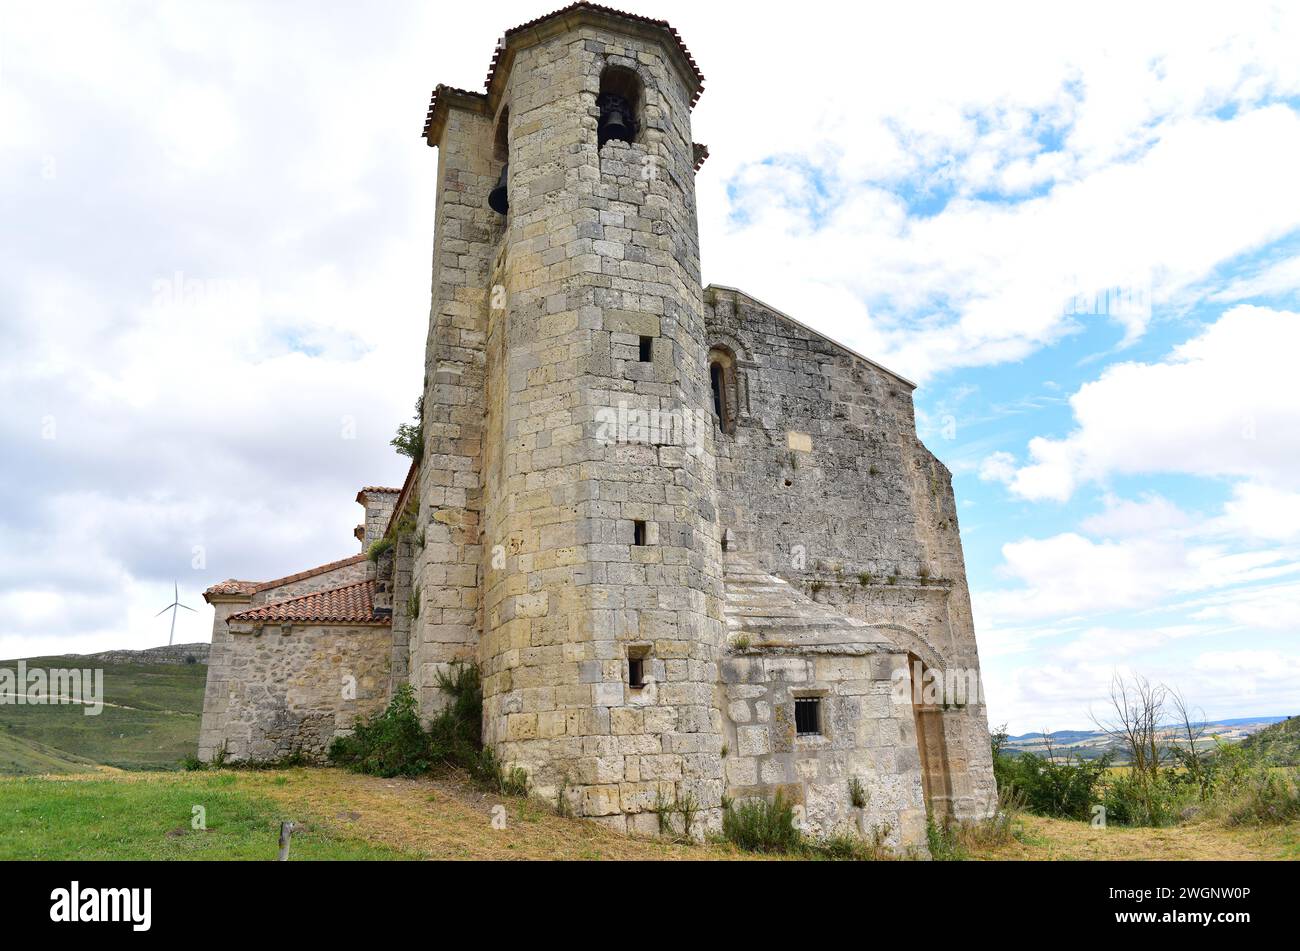 Monasterio de Rodilla, Santa Marina church (romanesque 12th century and gothic). La Bureba, Burgos province, Castilla y Leon, Spain. Stock Photo